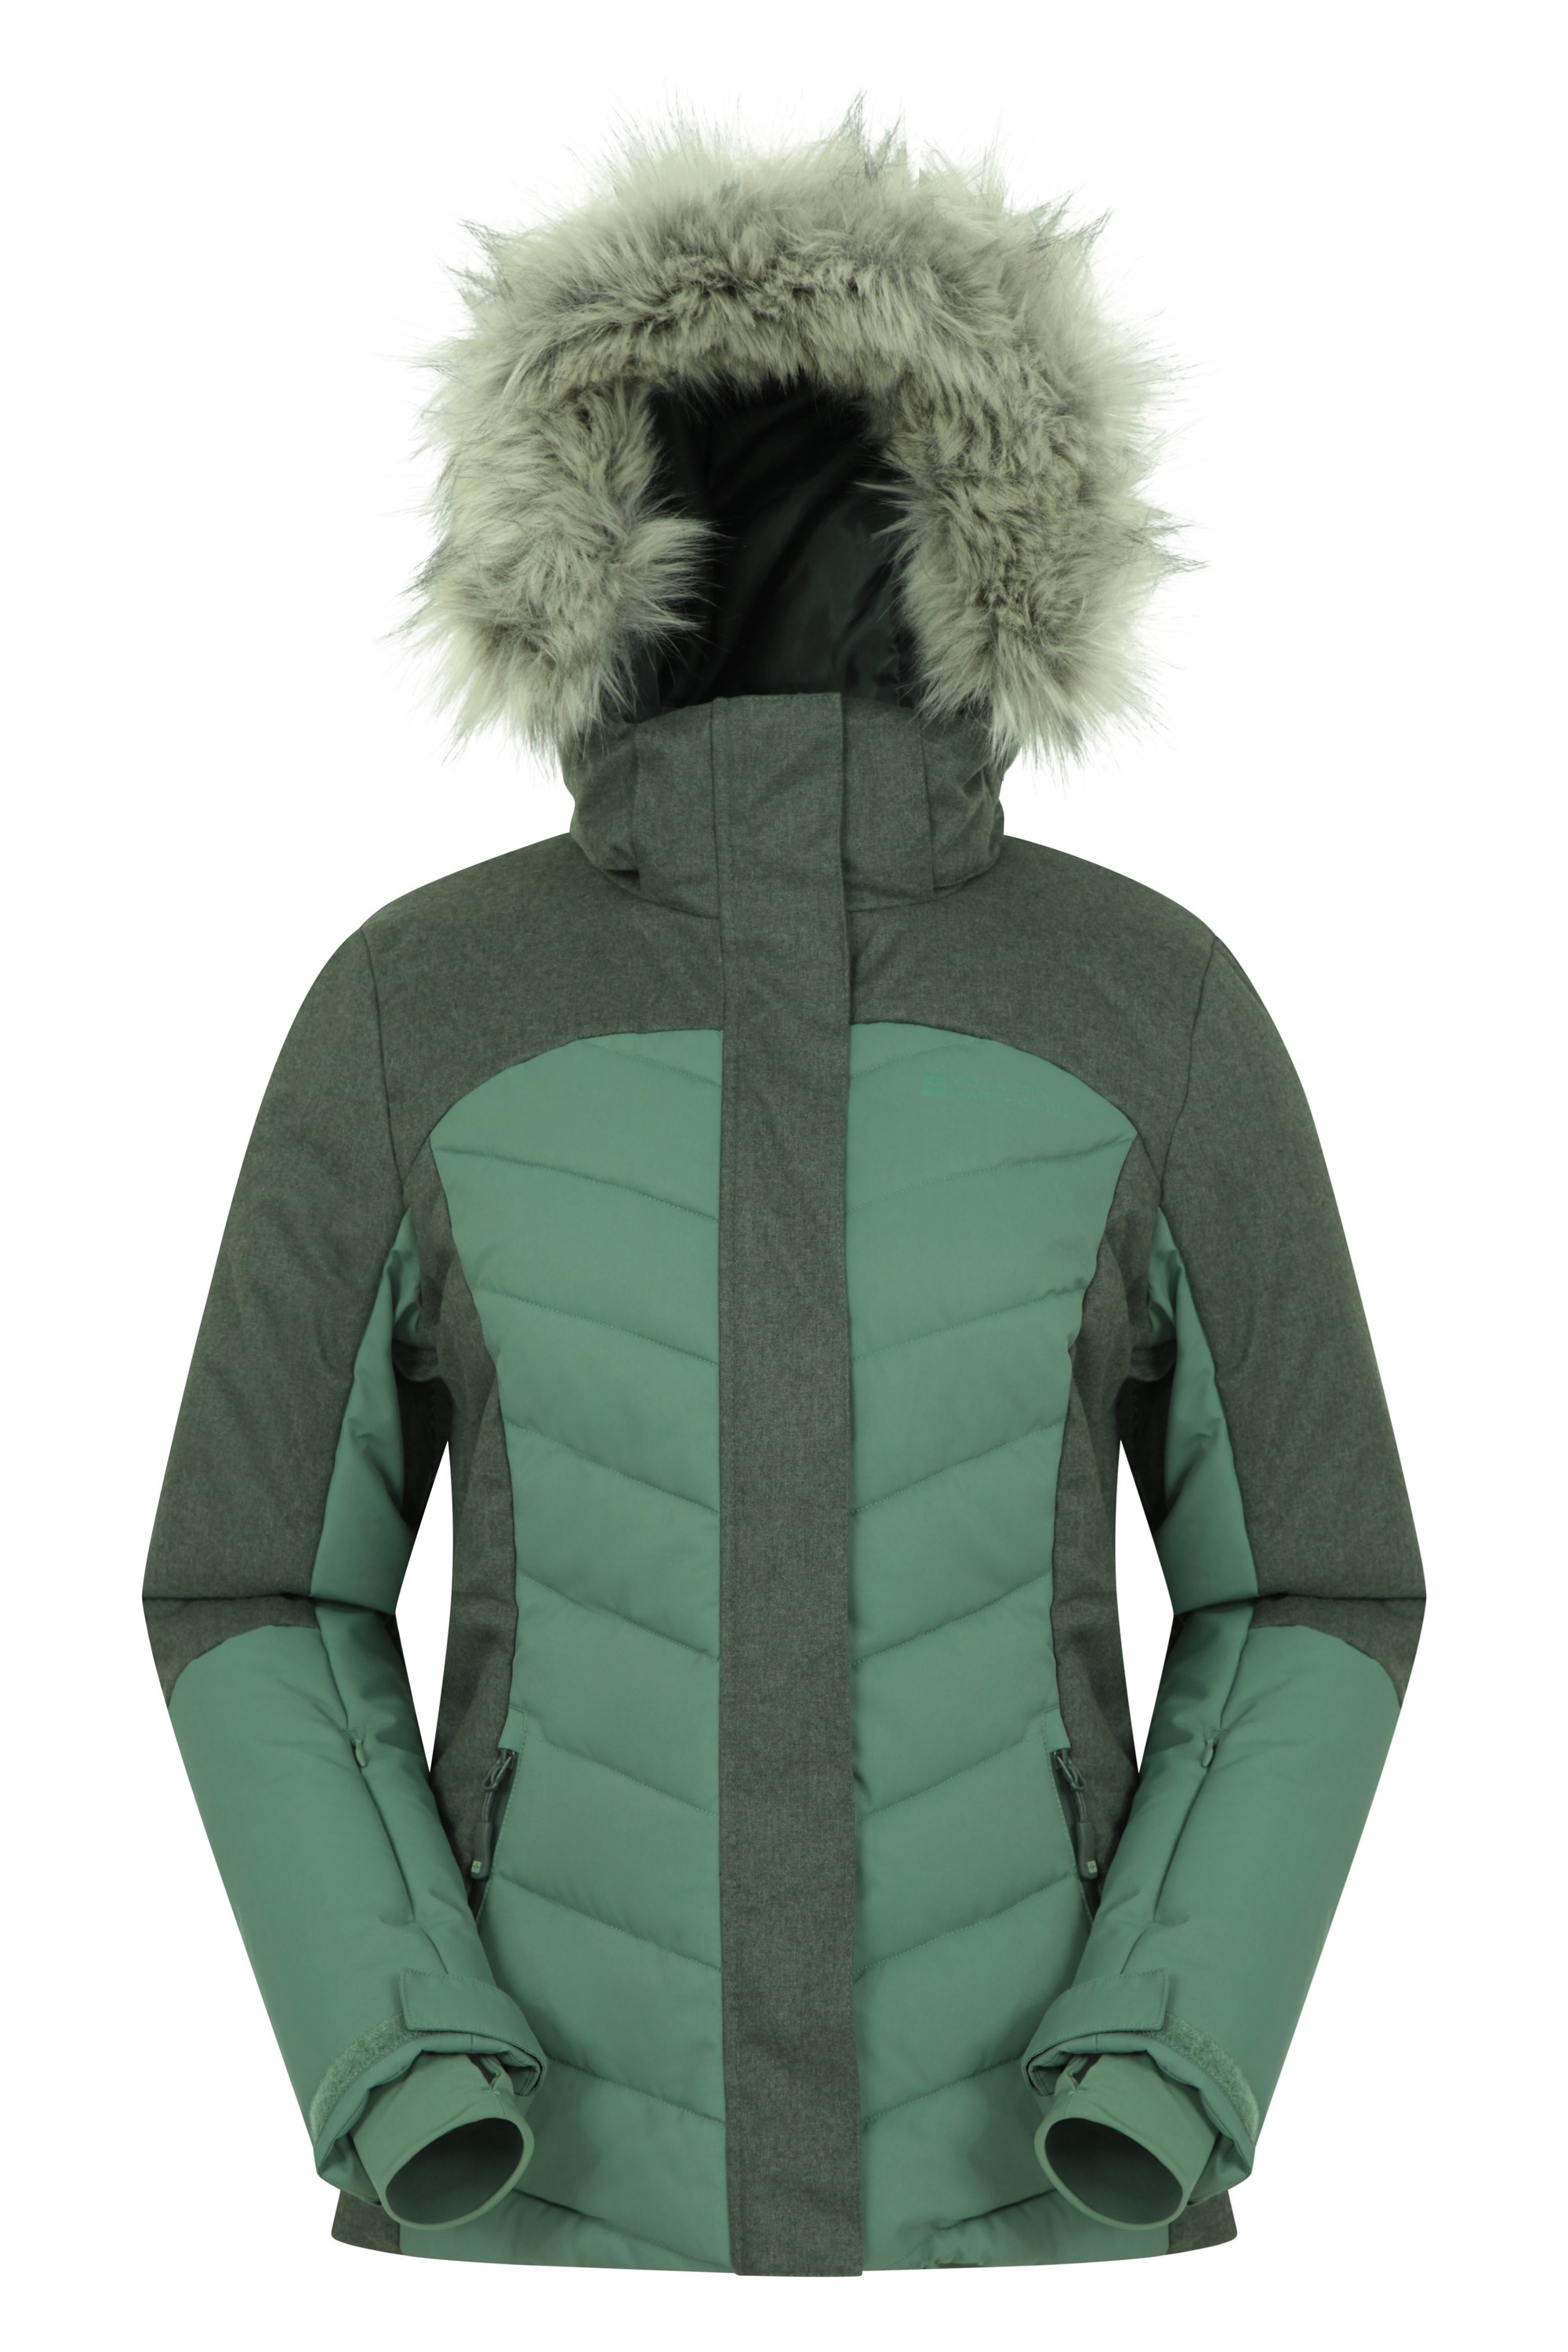 Snowproof Adjustable Hood Mountain Warehouse Moon Womens Ski Jacket Ideal For Winter Sports Skiing Snowboarding 